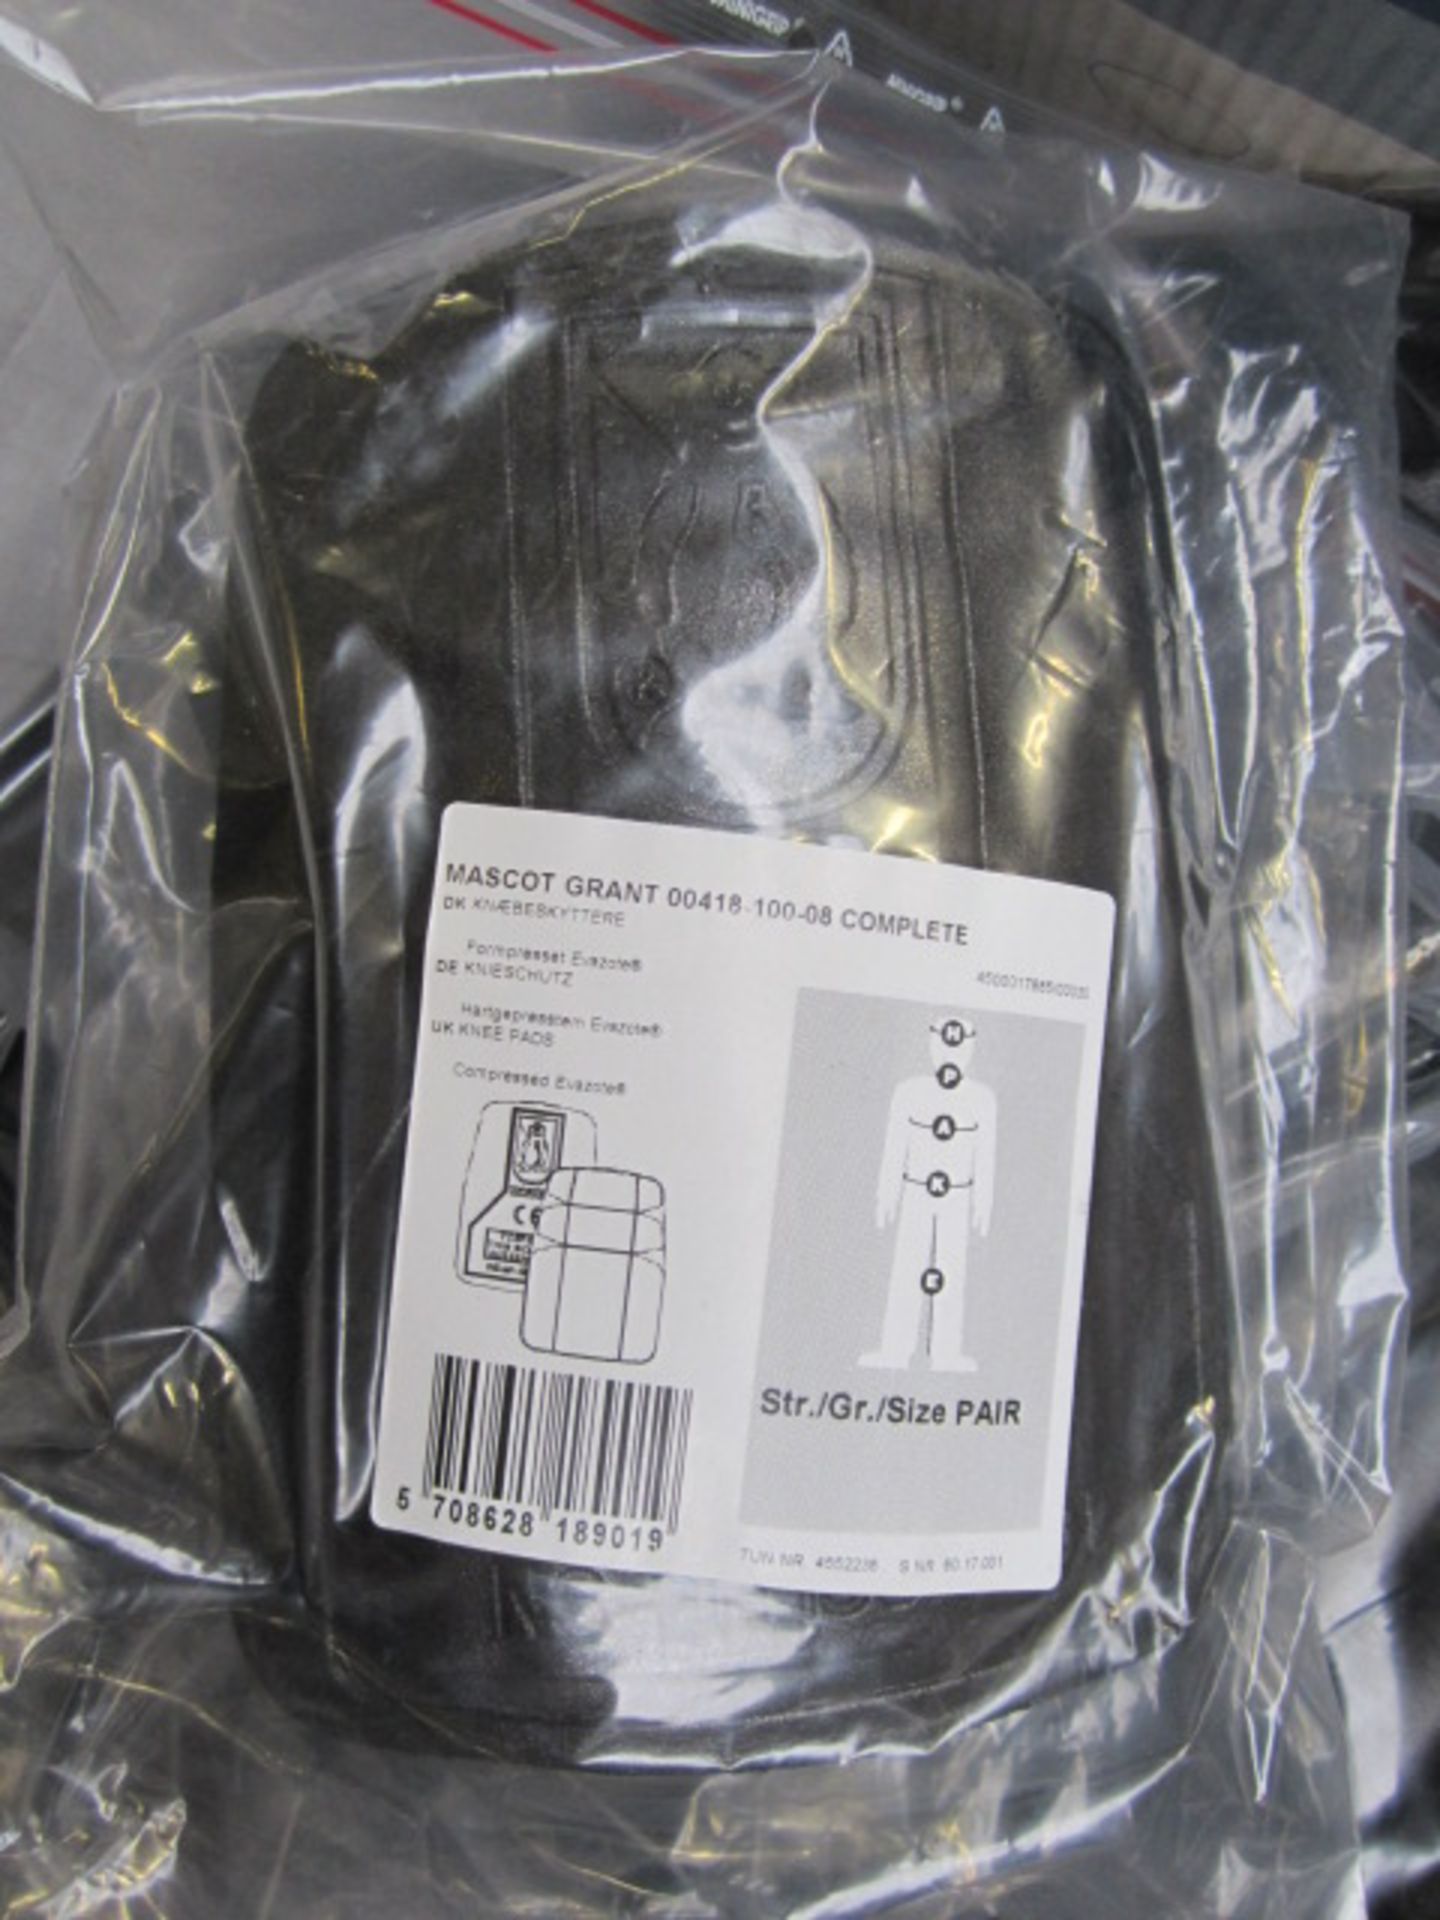 Pallet of assorted knee pads including 21 - Furwest Super Gel filled, mascat, virlex heavy duty - Image 4 of 5